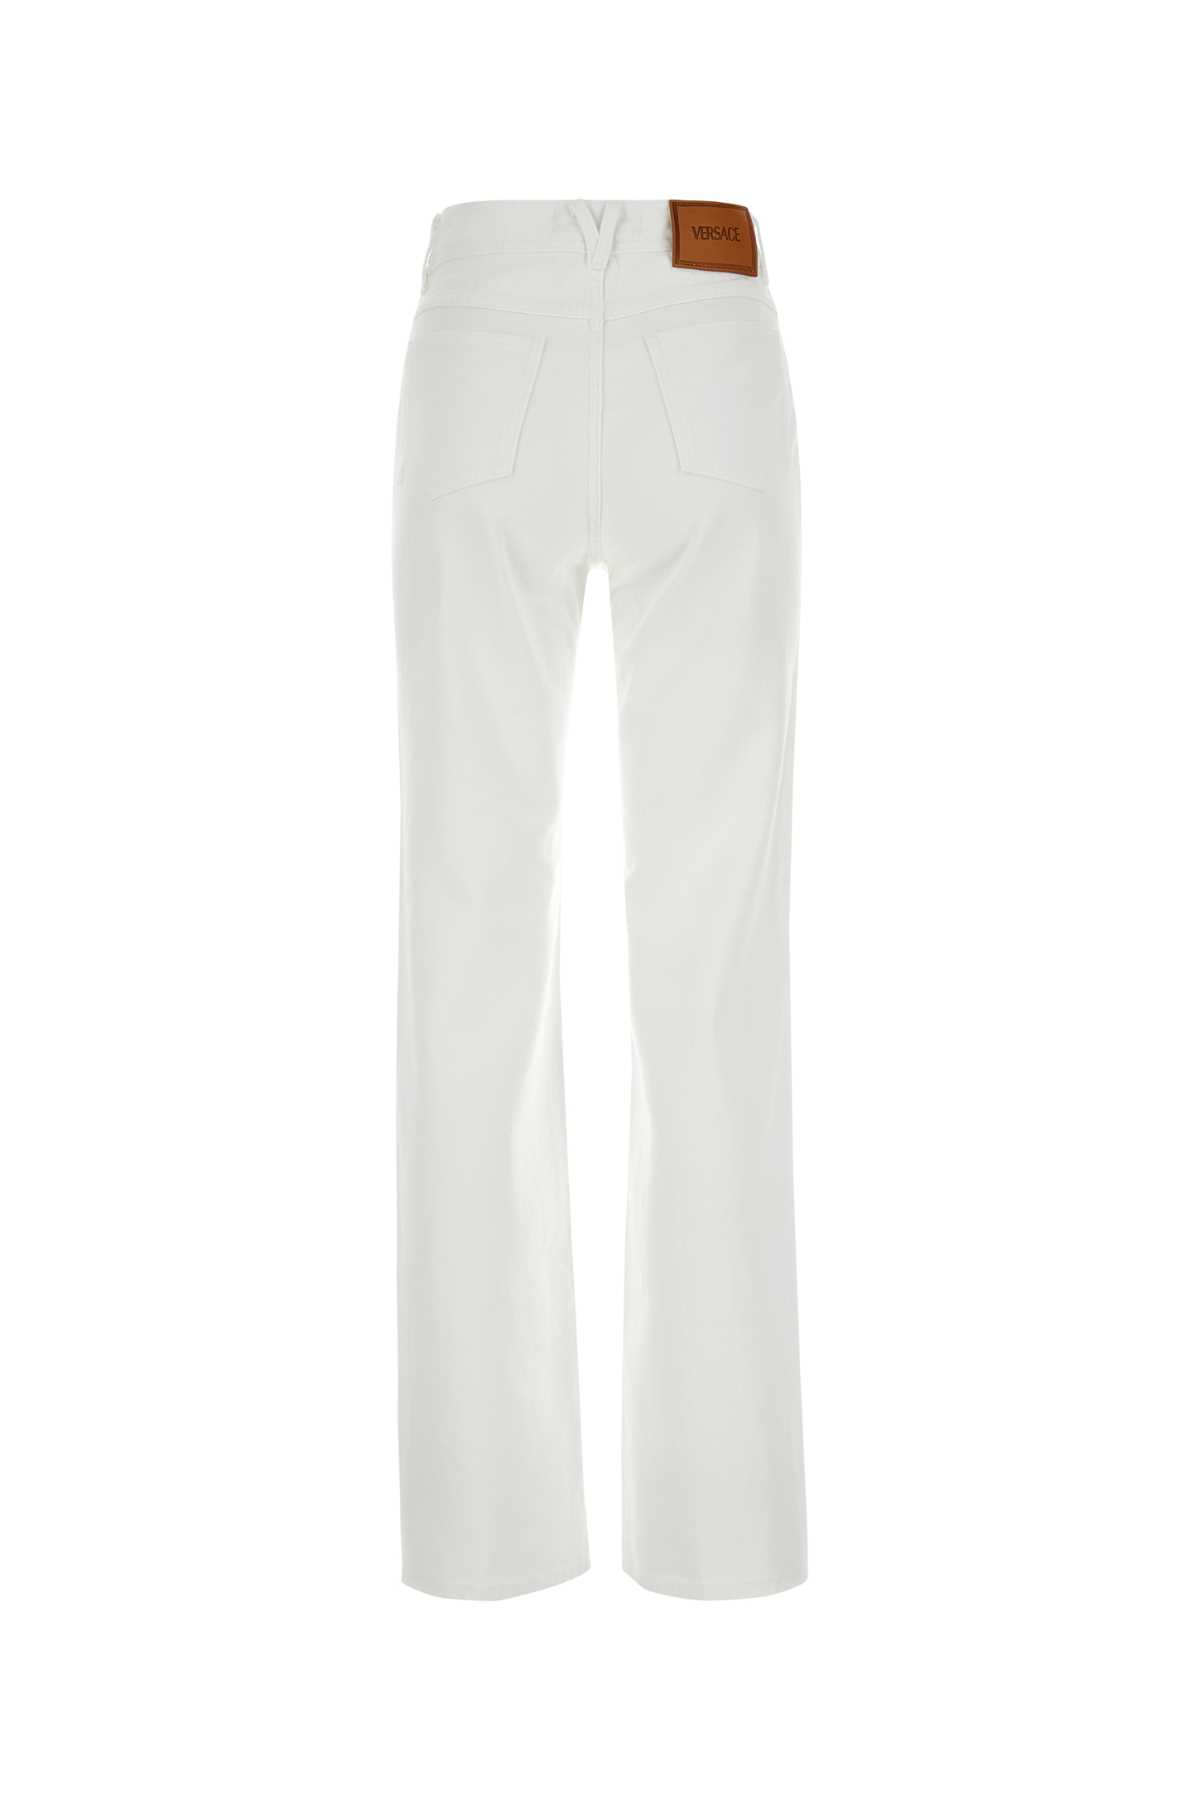 Versace White Denim Jeans In 1d110white